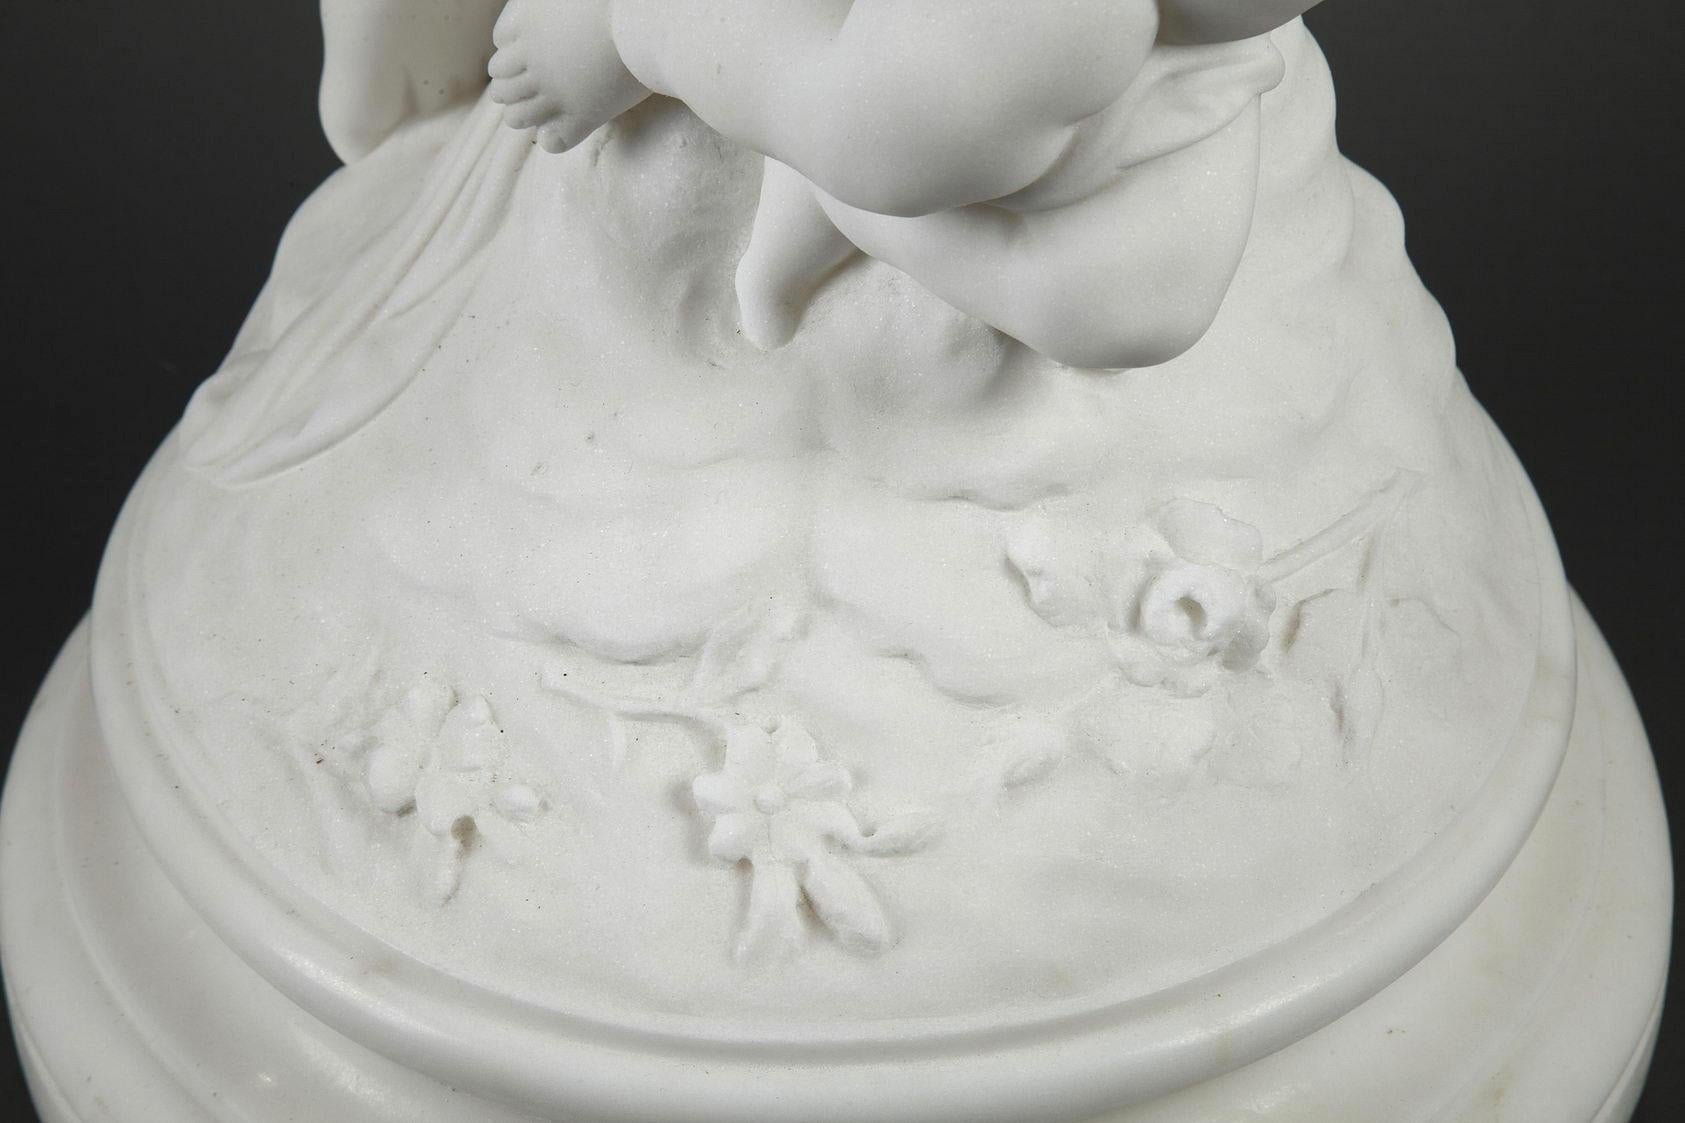 Daytime, marble sculpture - Academic Sculpture by James Pradier